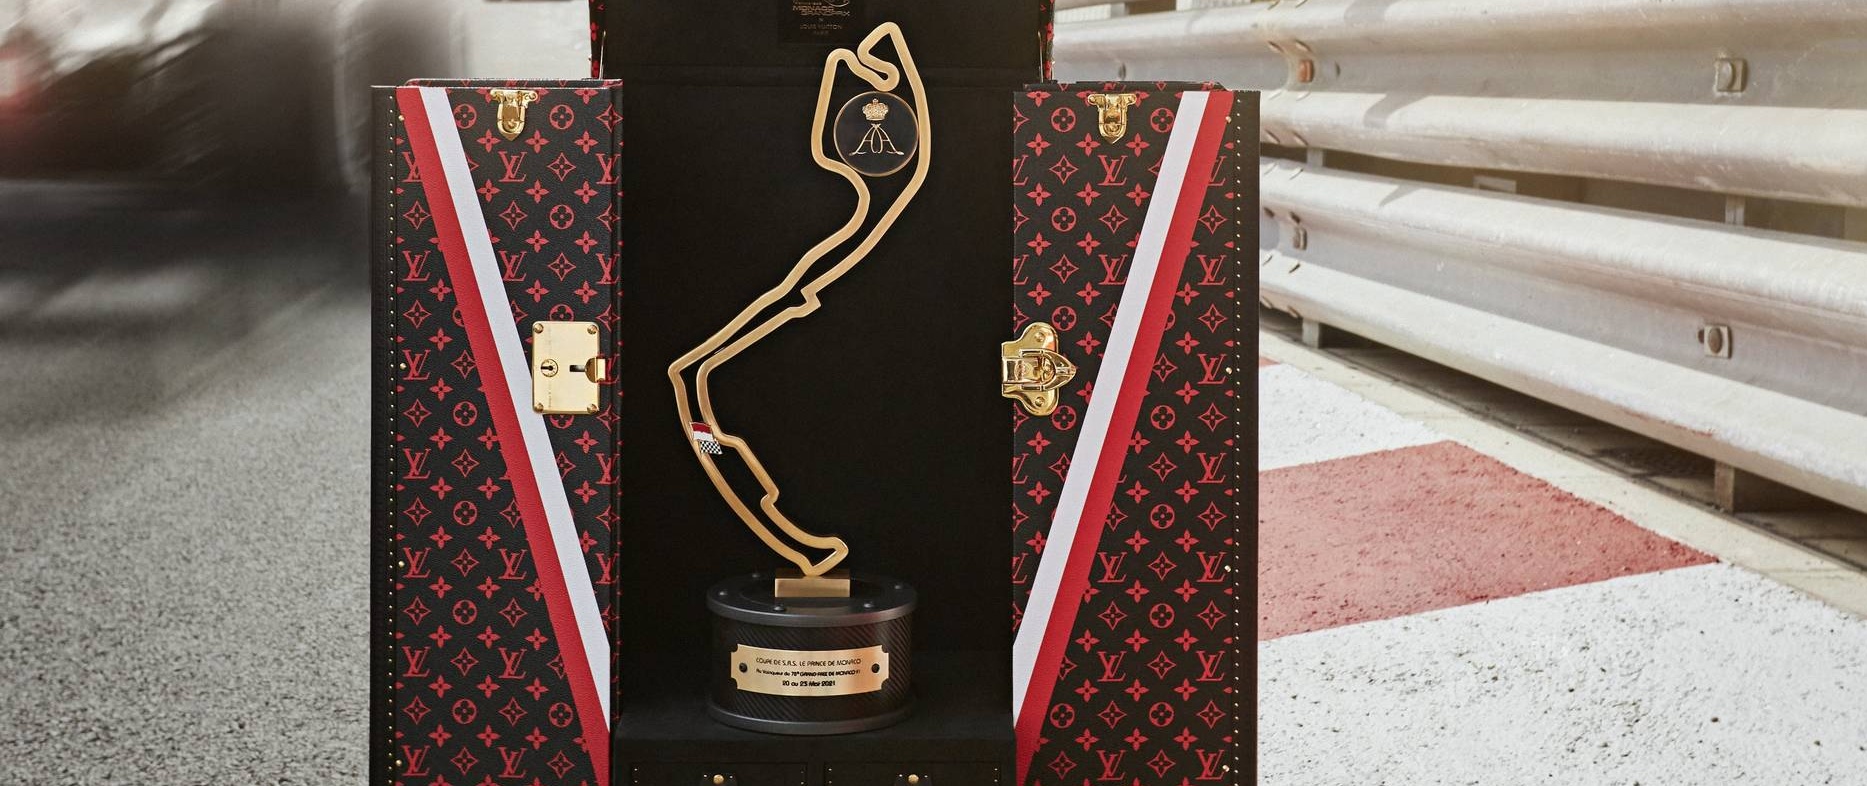 Formula 1 Grand Prix de Monaco Trophy Awarded in Louis Vuitton